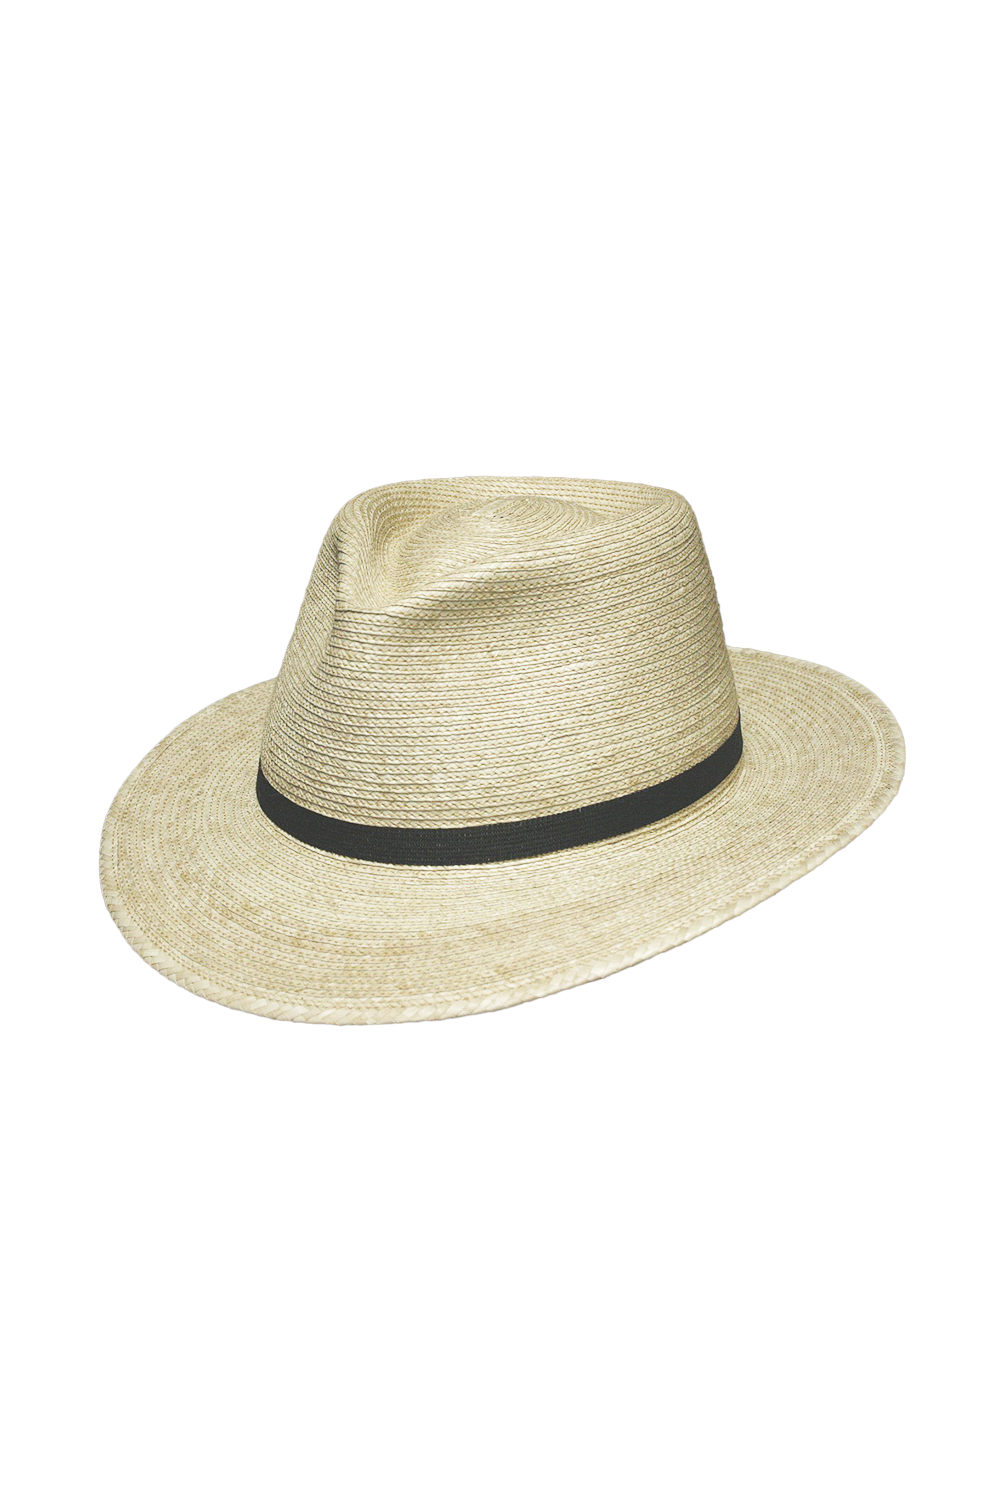 The Sabine Hat